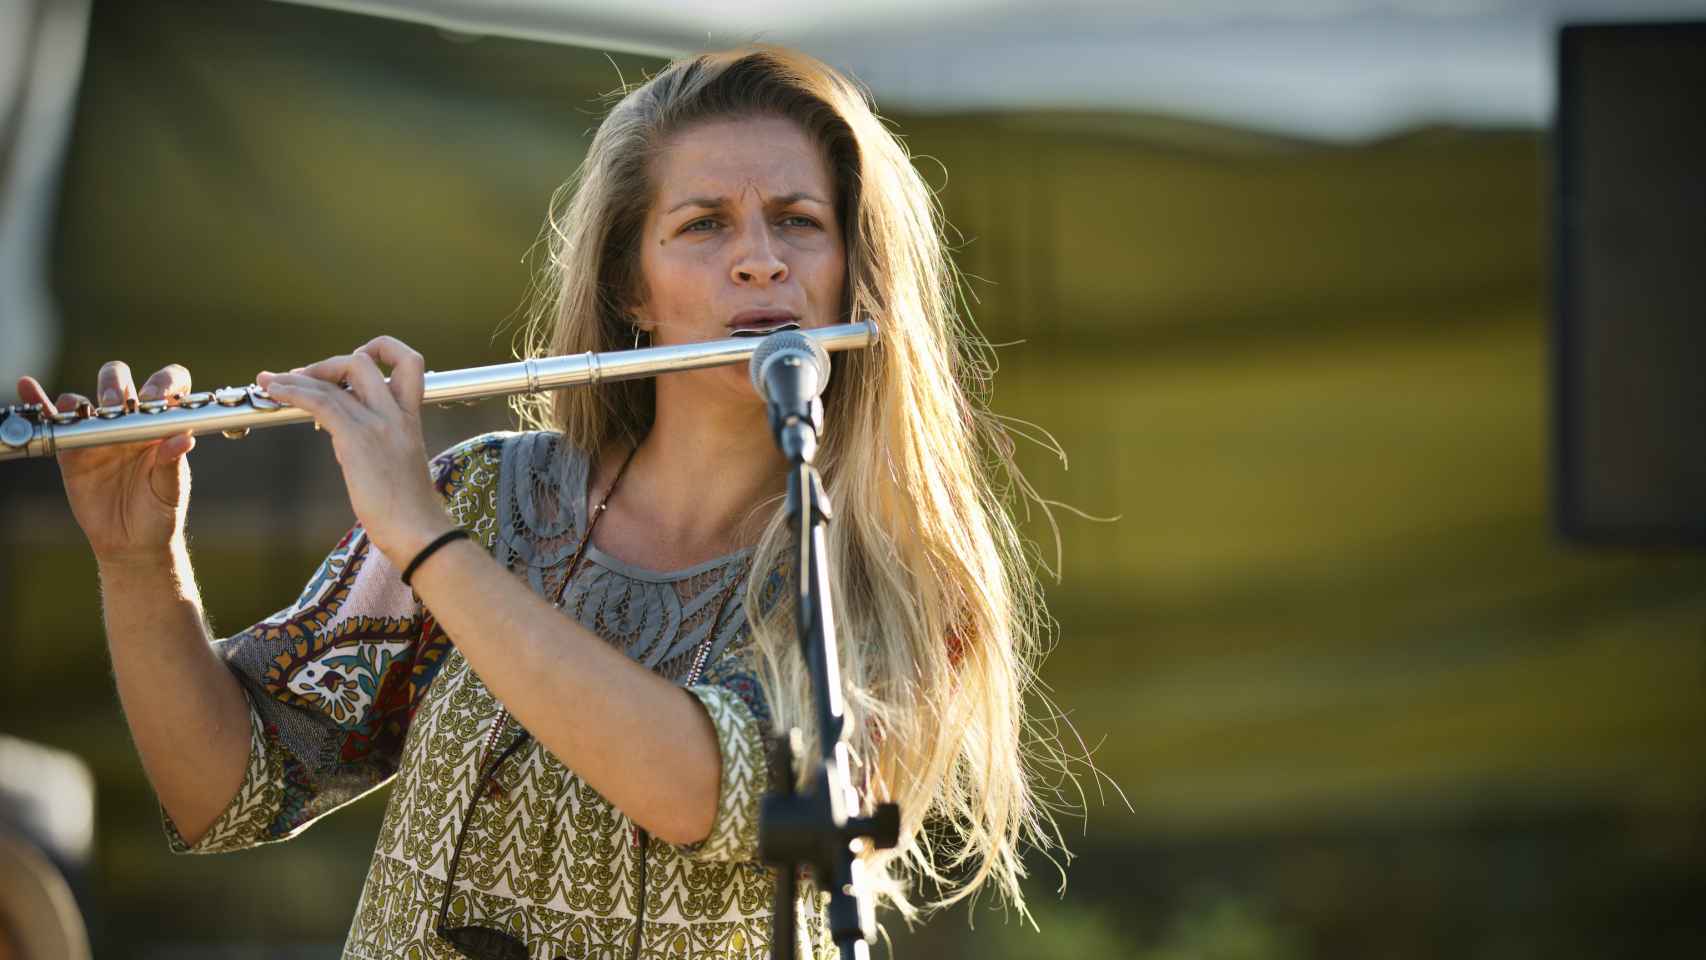 La artista tocando la flauta travesera.